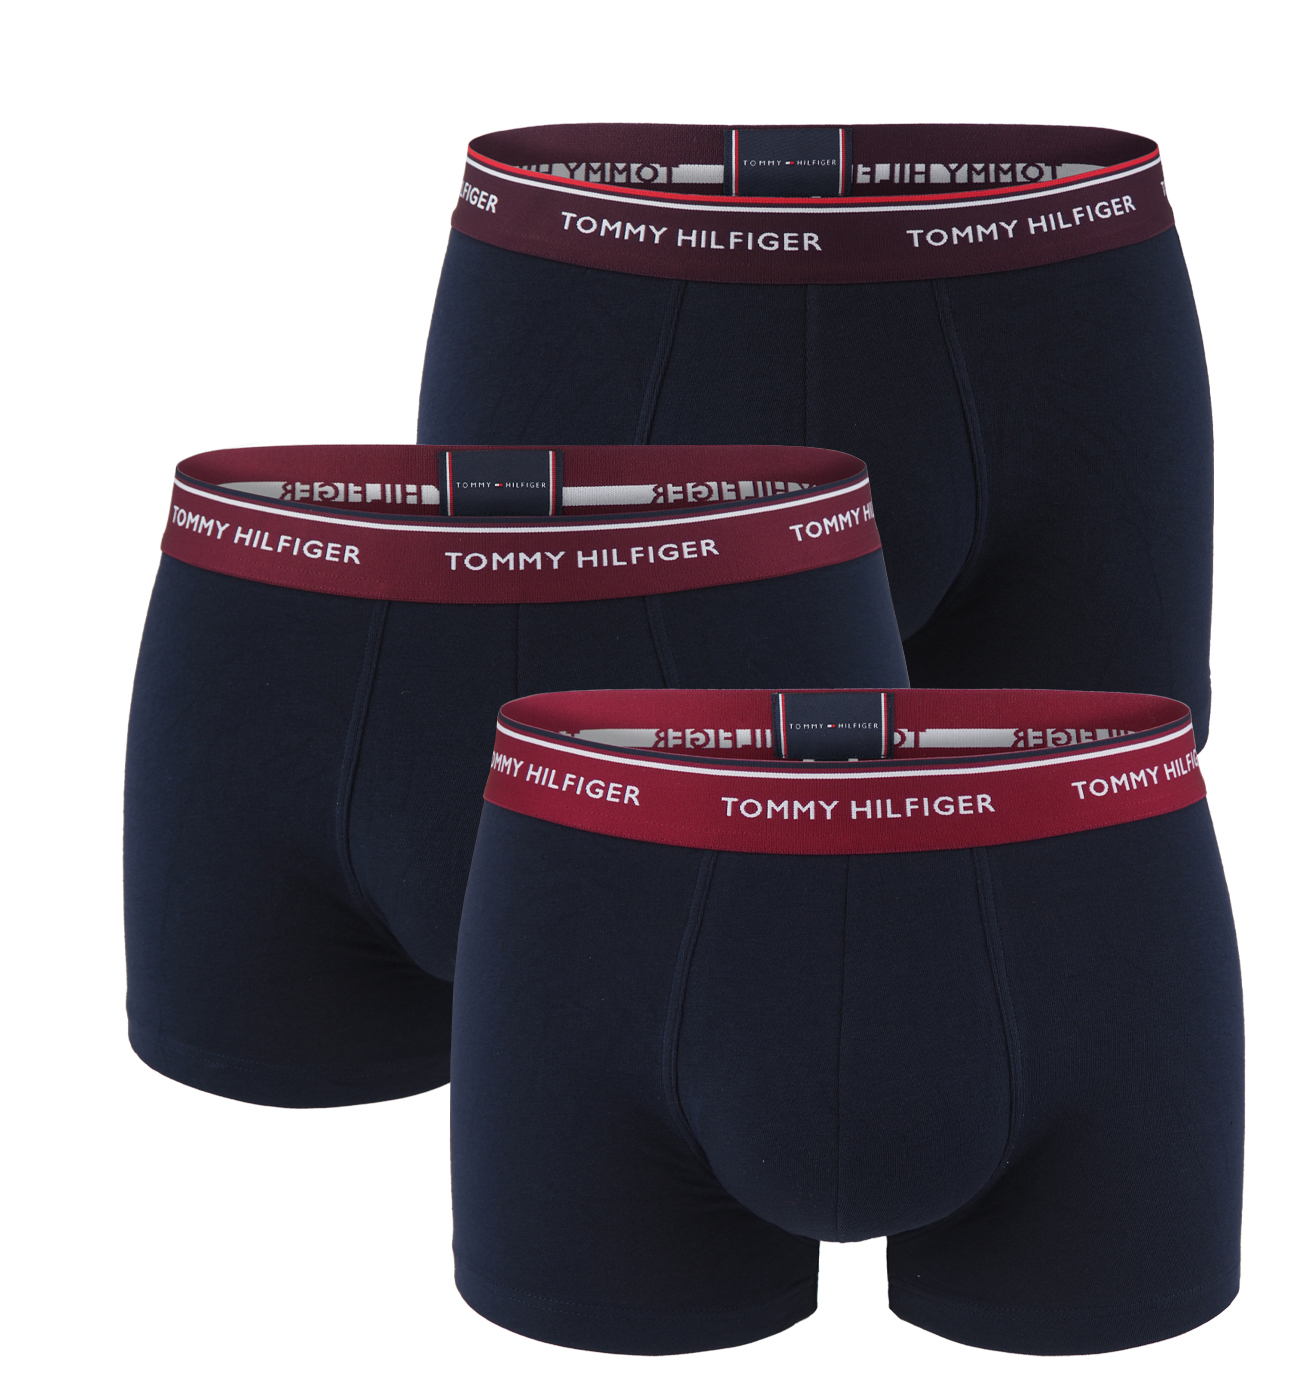 TOMMY HILFIGER - boxerky 3PACK premium essentials dark color with burgundy waist - limitovaná edícia